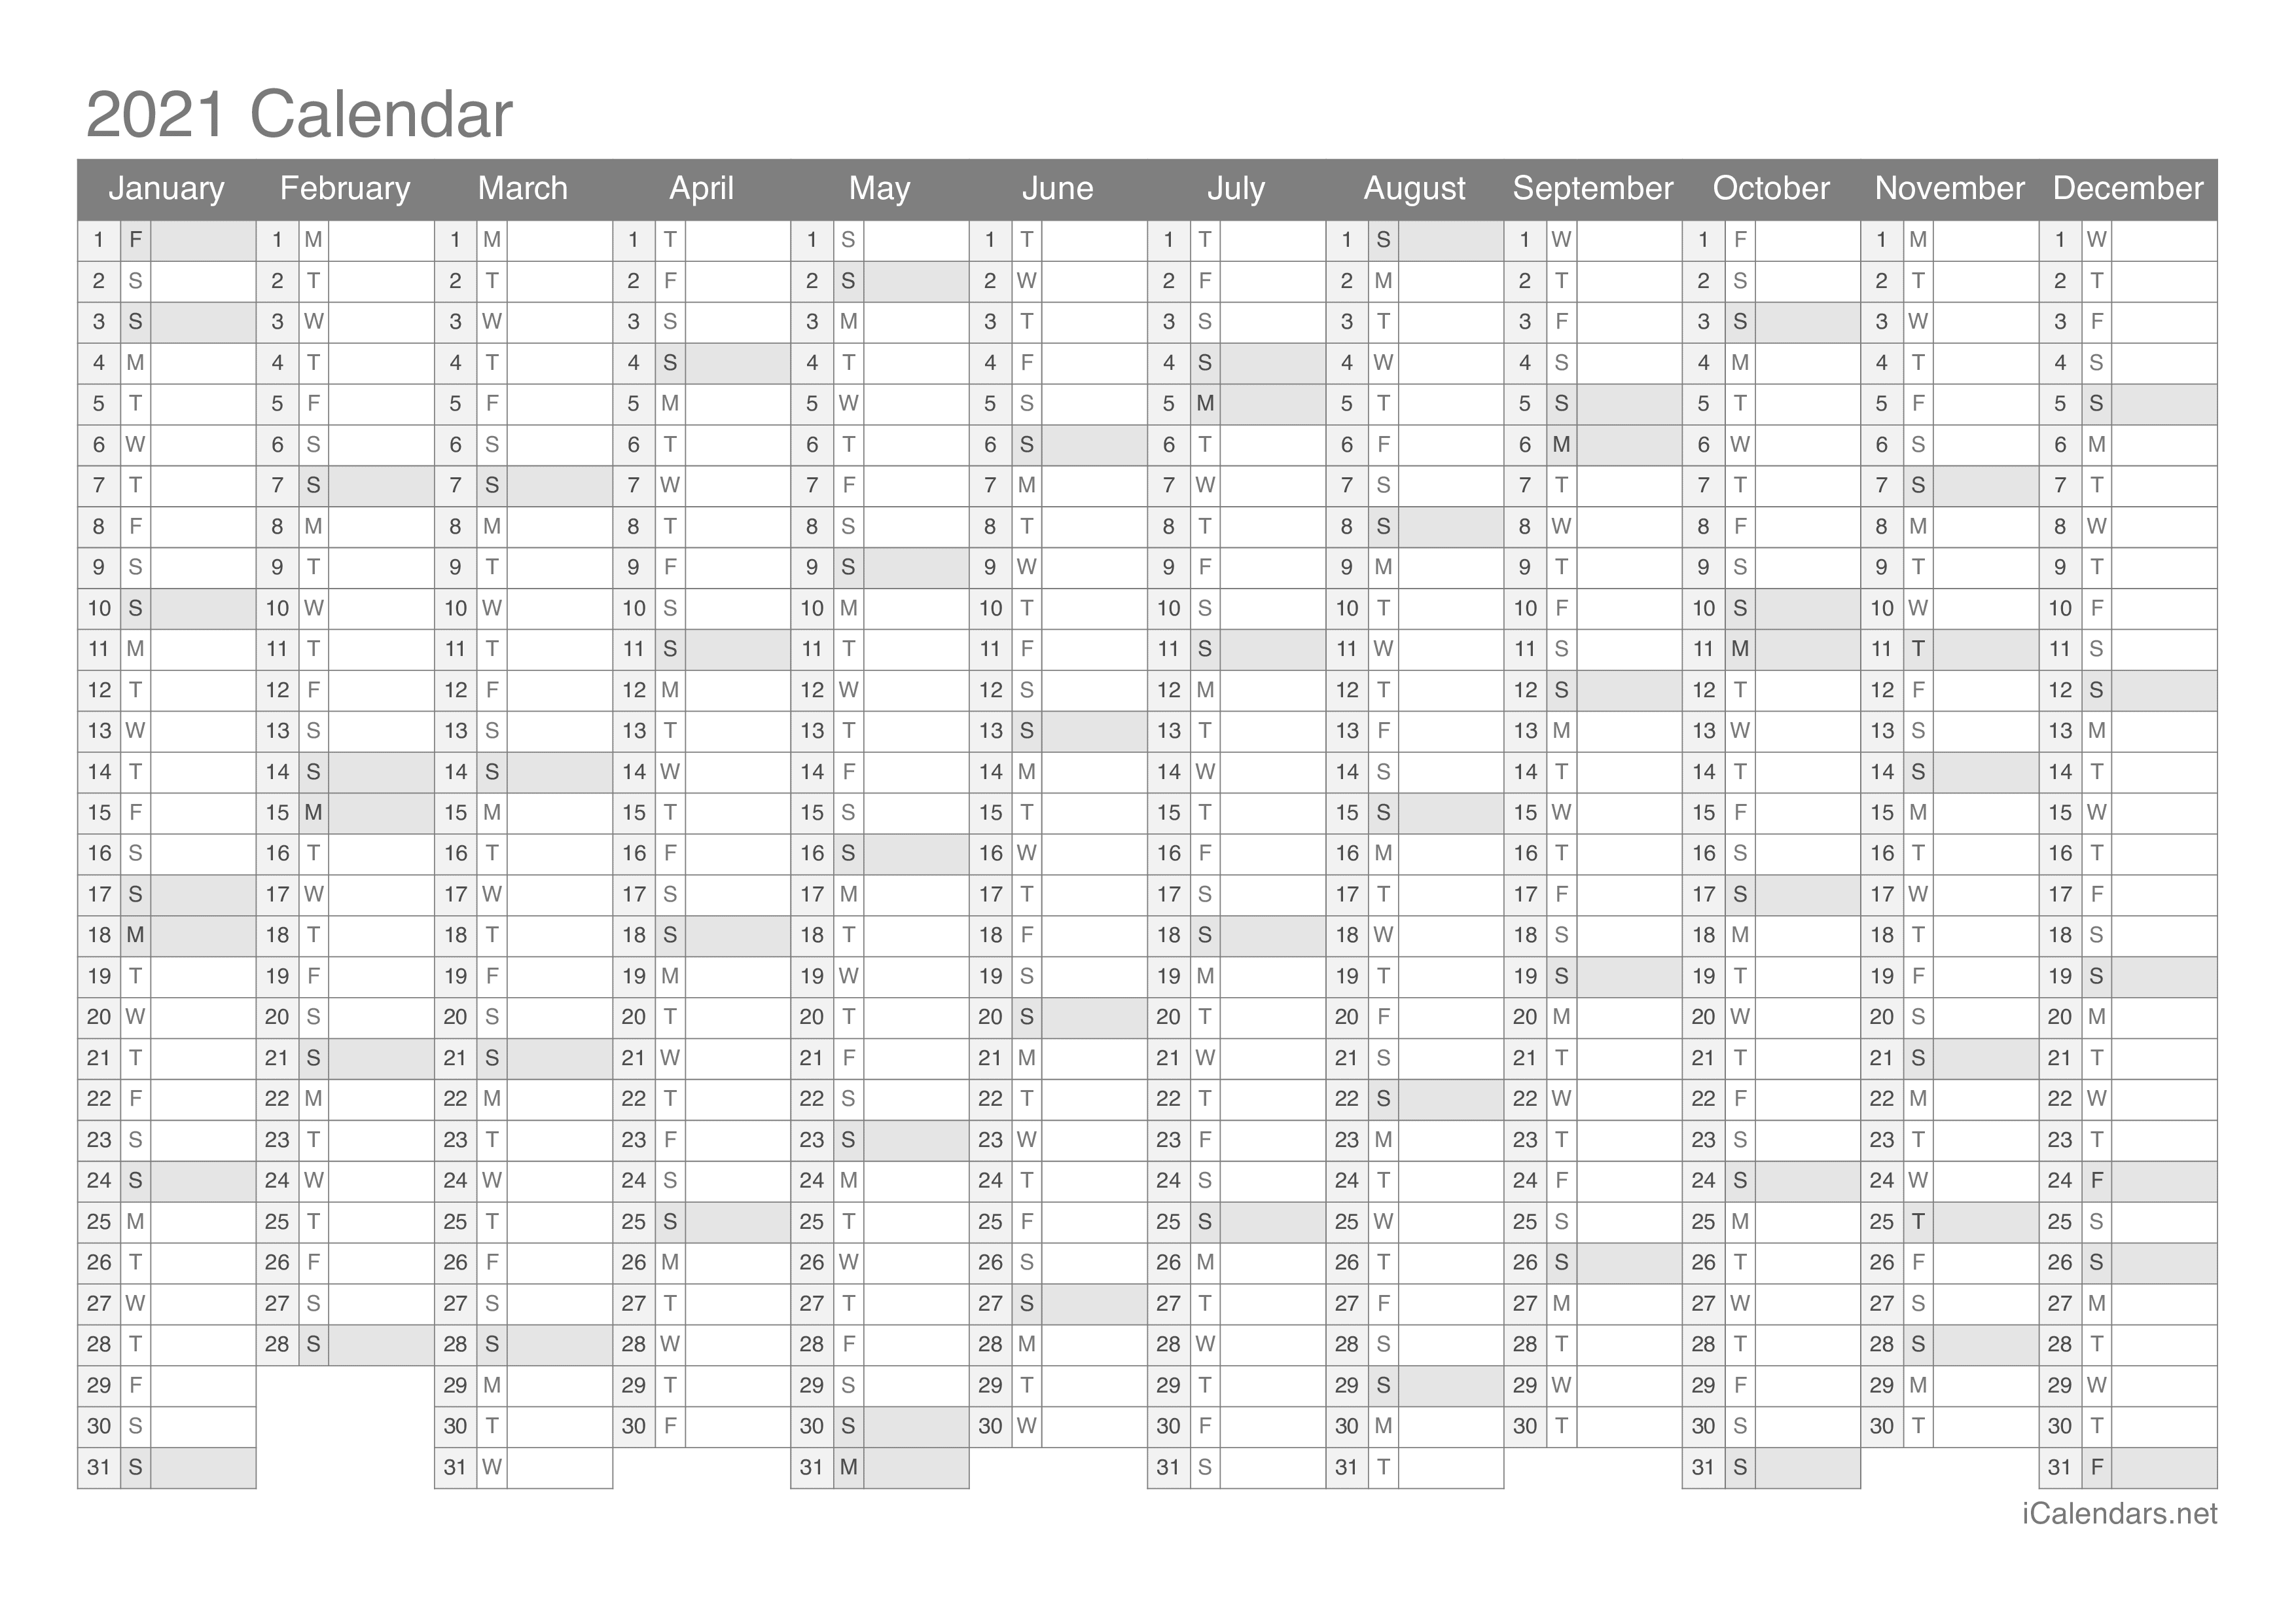 Yearly Calendar 2021 Printable 2021 Printable Calendar   PDF or Excel   icalendars.net